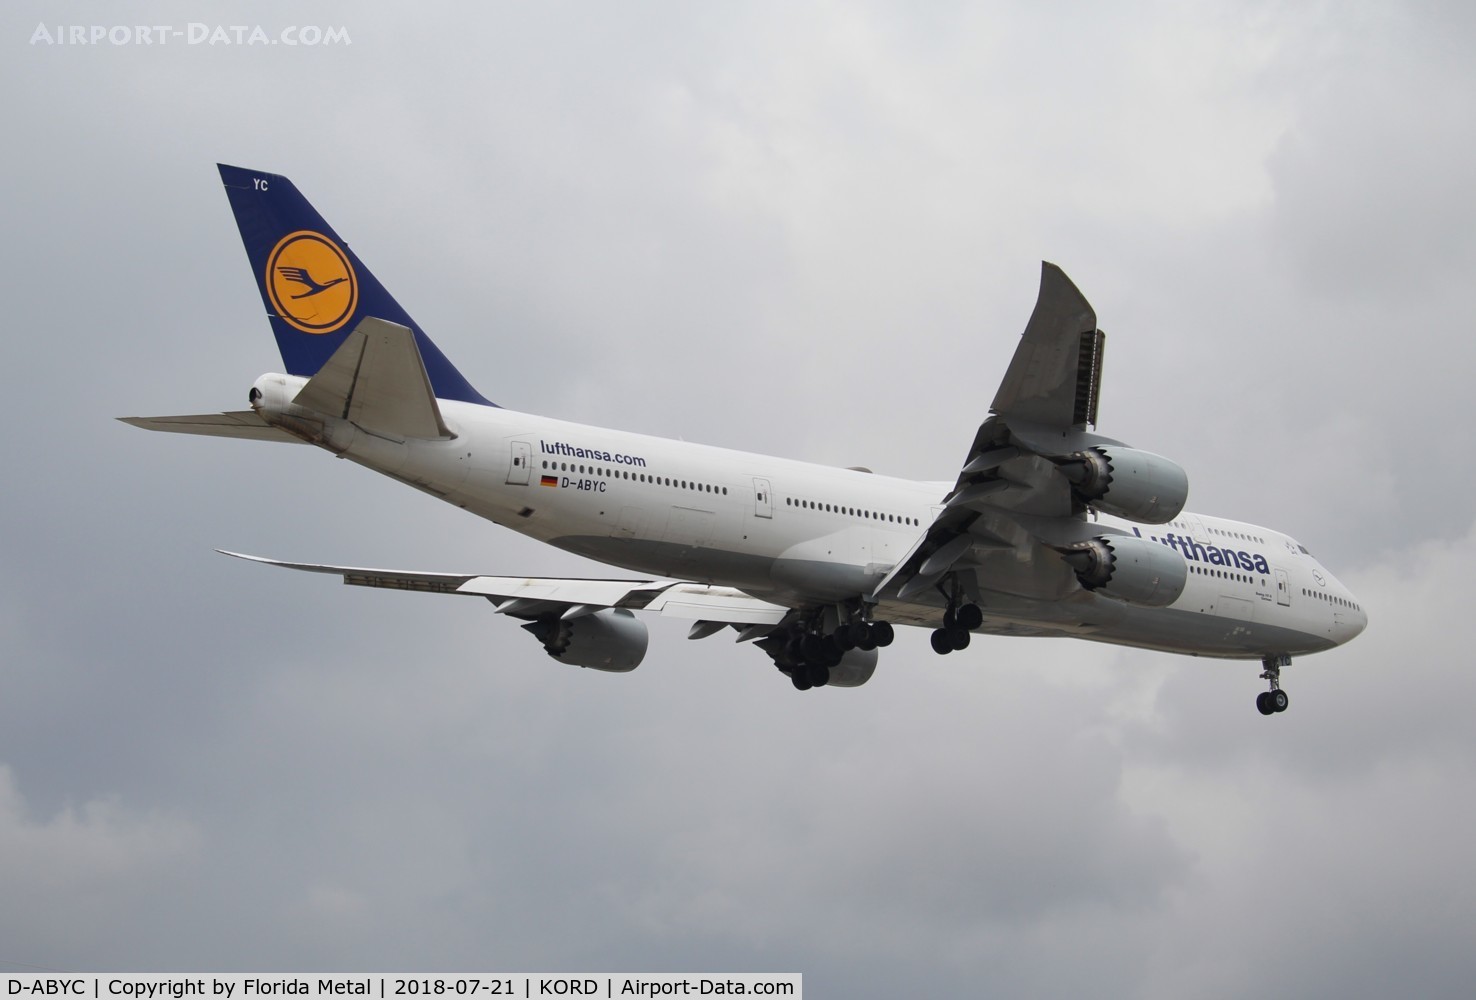 D-ABYC, 2012 Boeing 747-830 C/N 37828, Lufthansa 748 zx